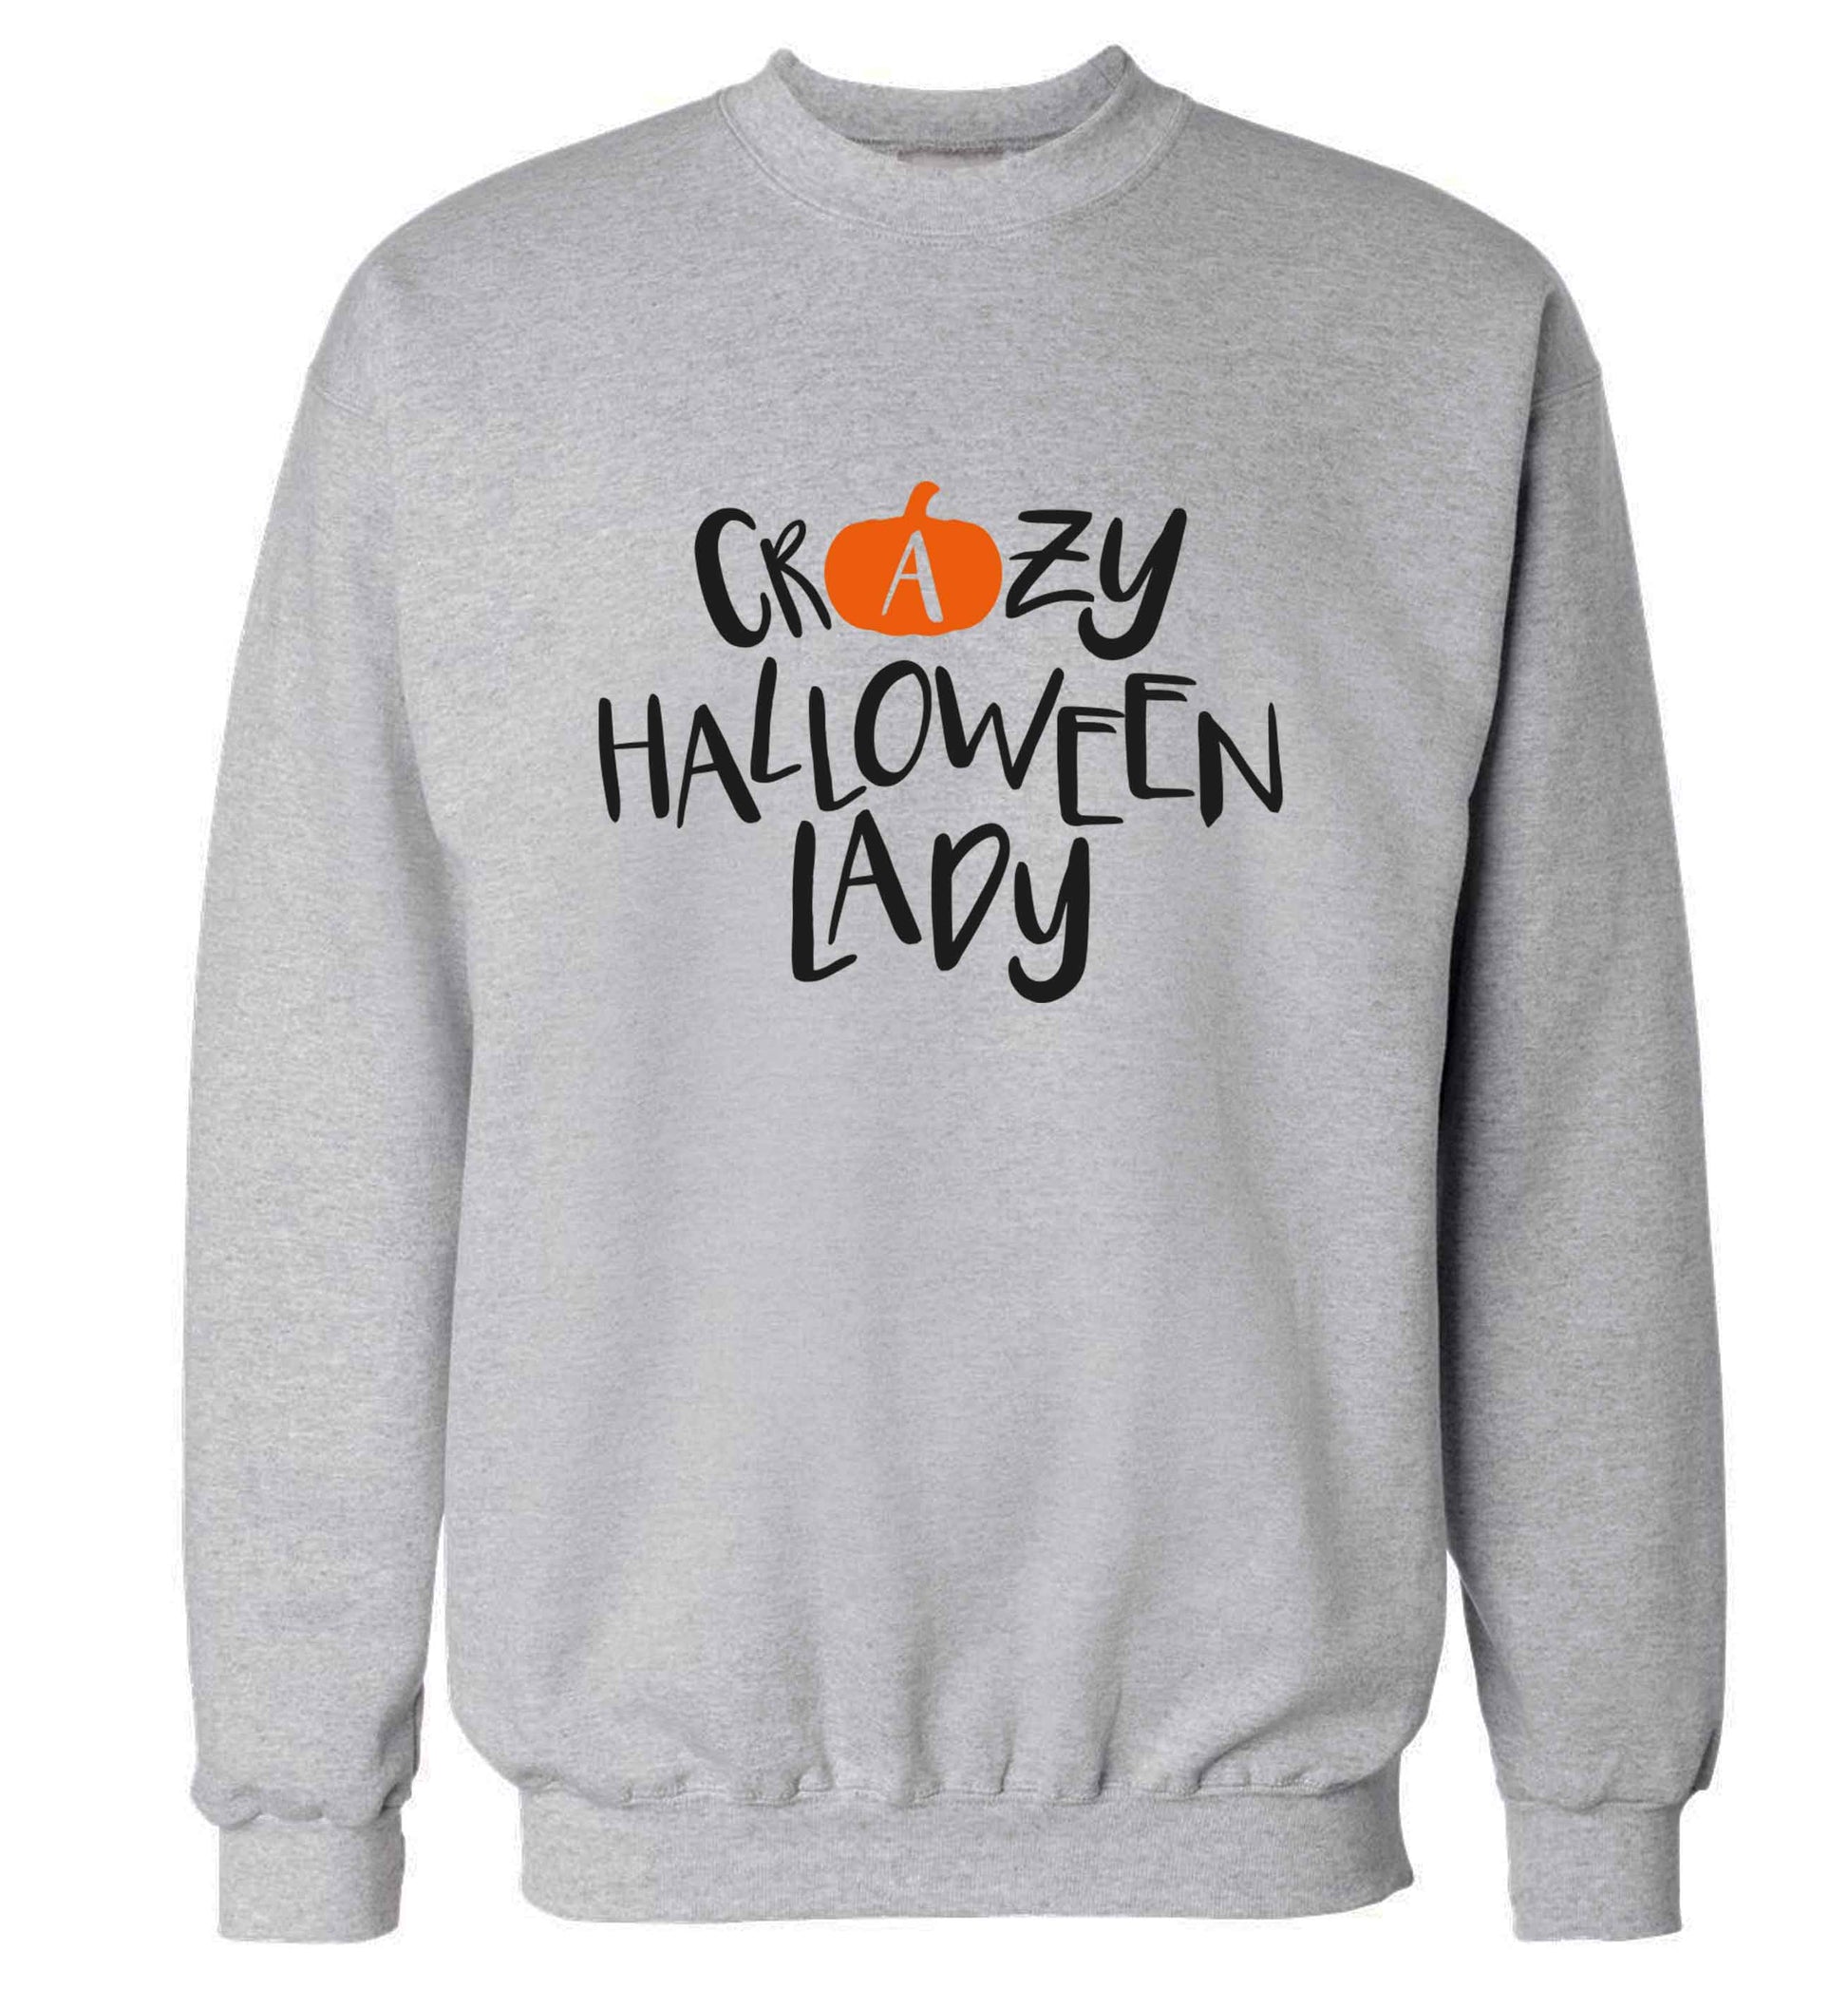 Crazy halloween lady adult's unisex grey sweater 2XL